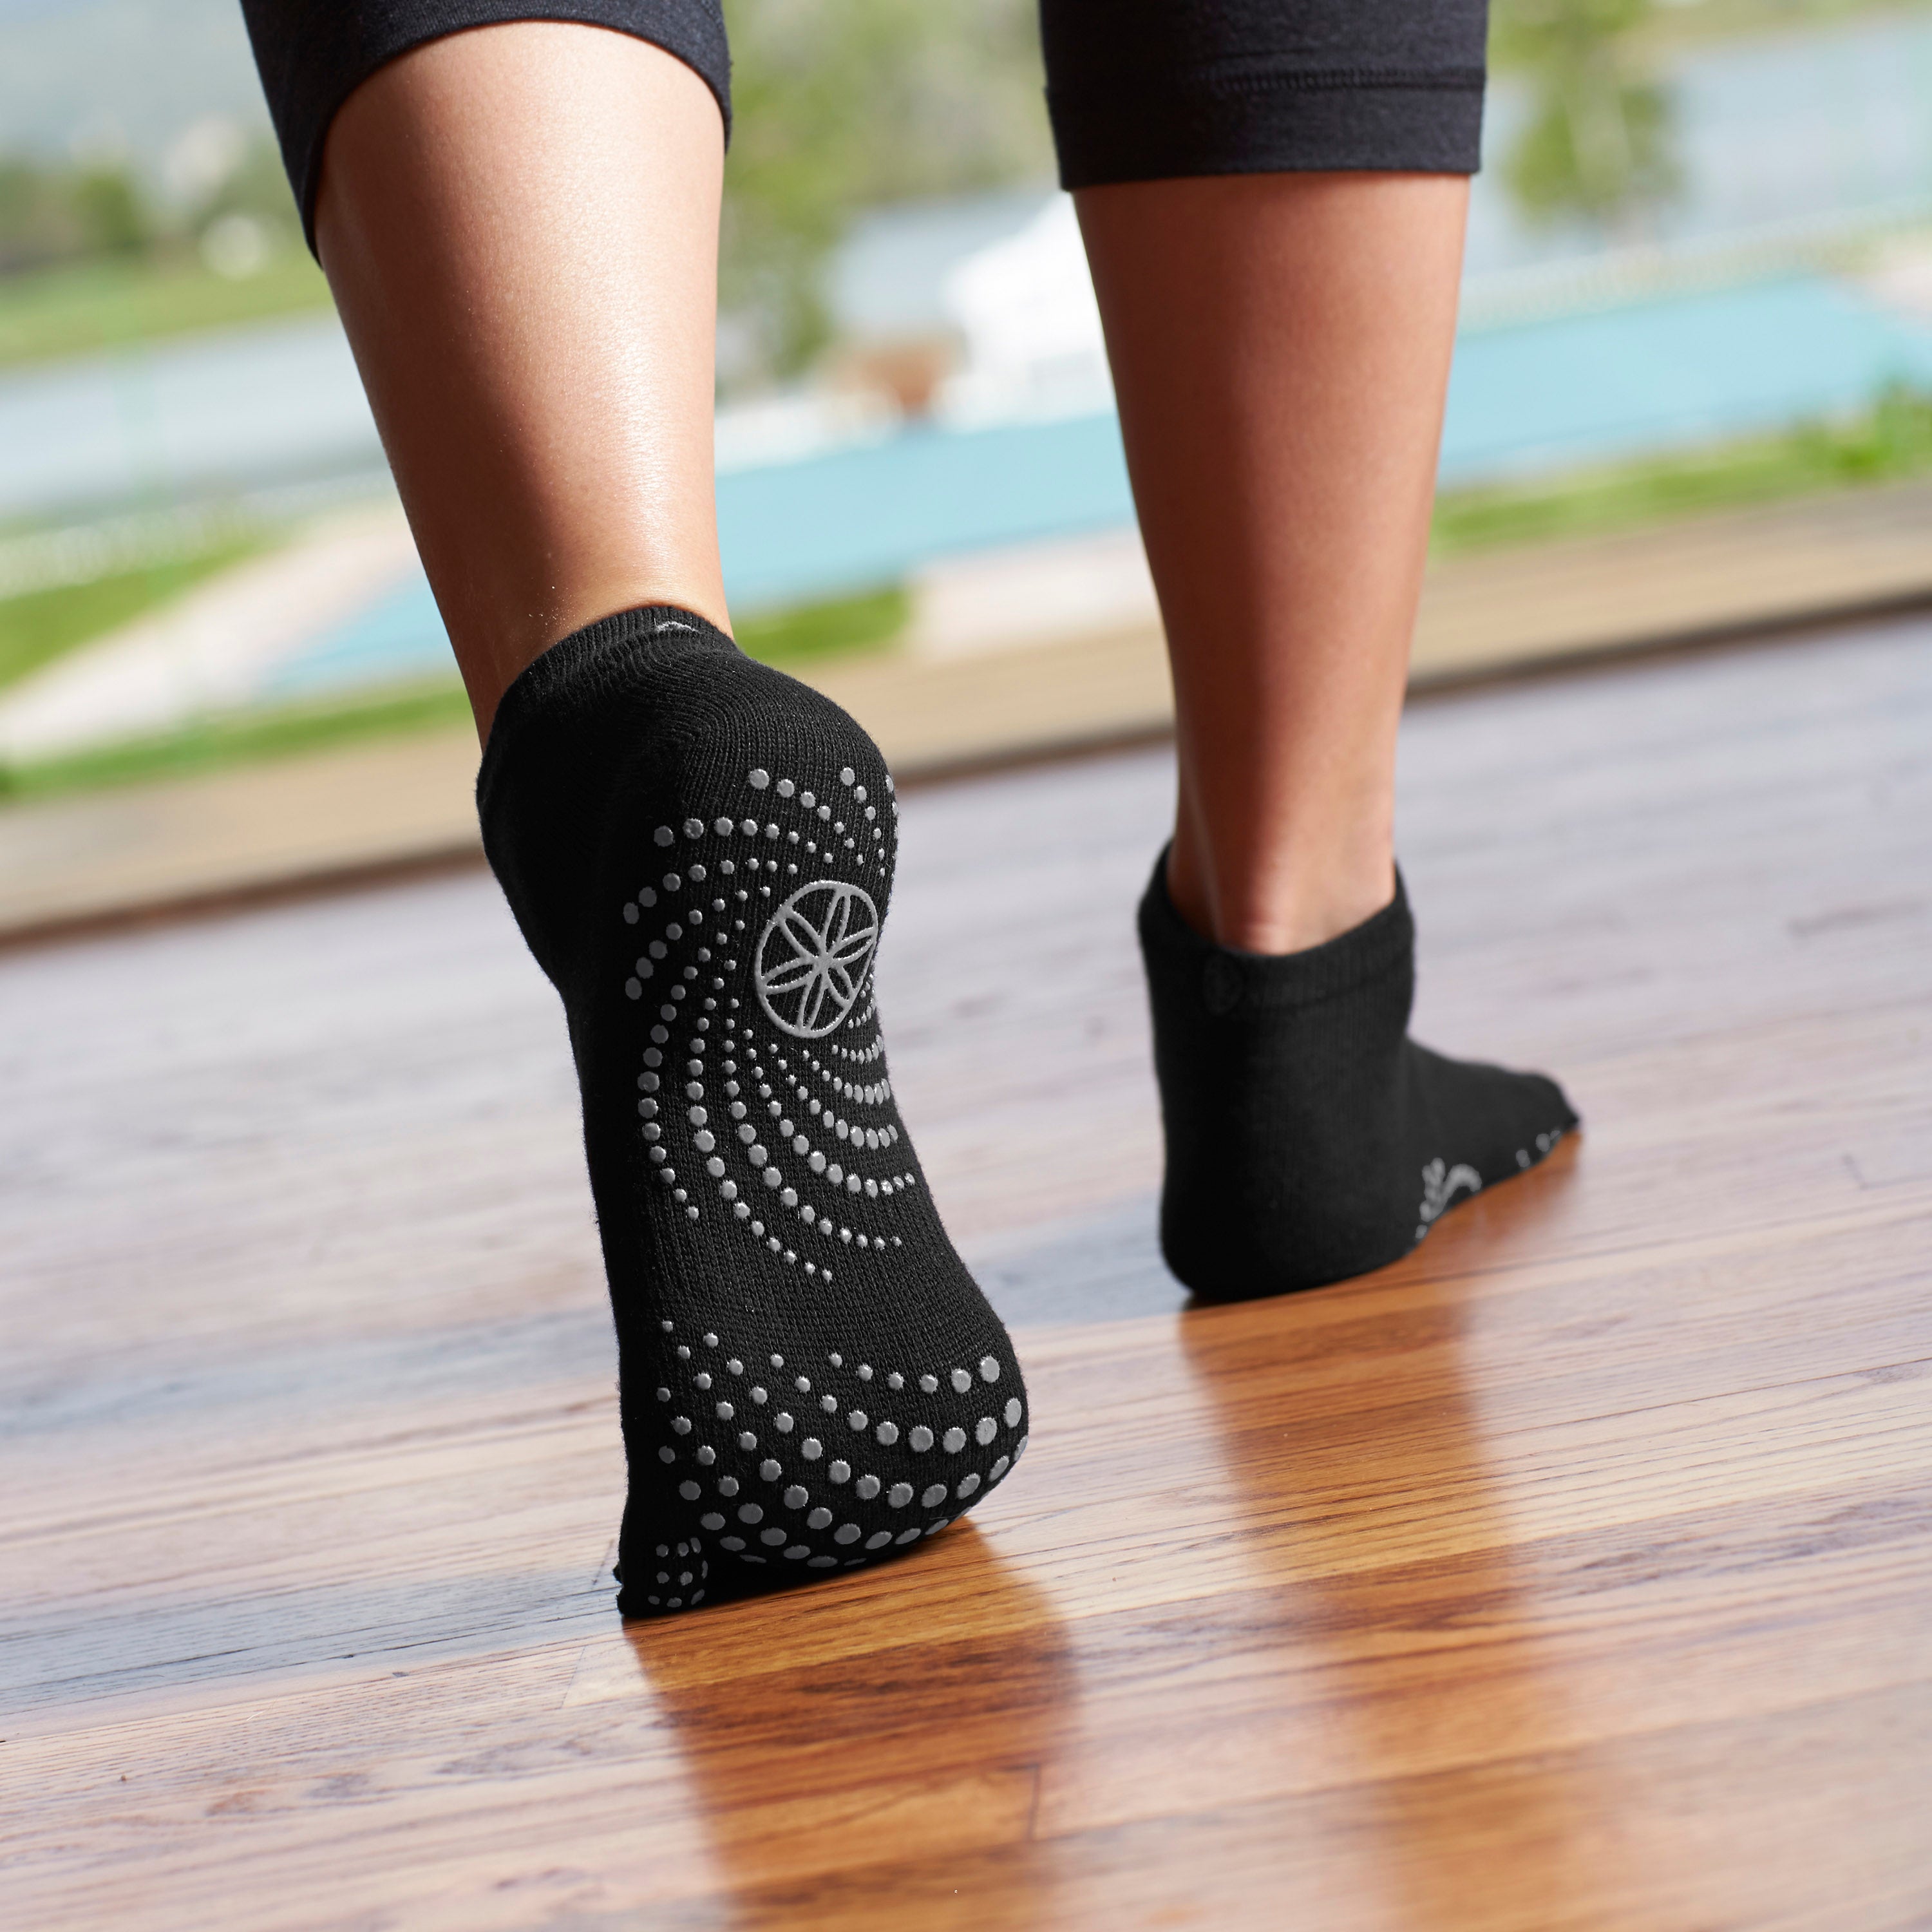 Grippy Yoga Socks walking